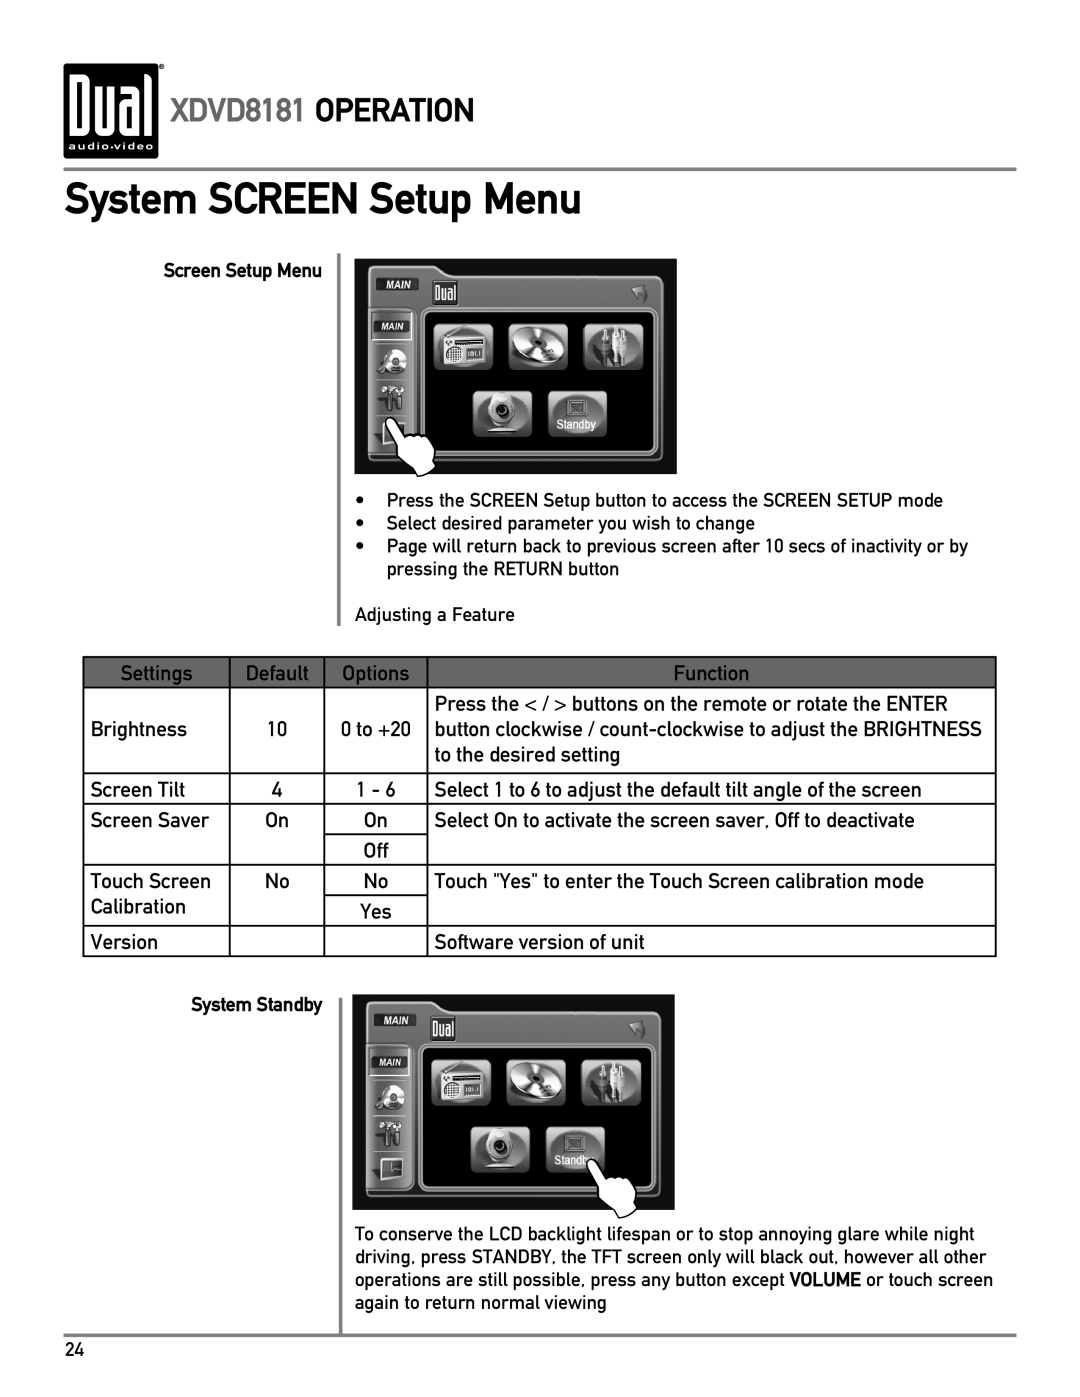 Dual owner manual System SCREEN Setup Menu, XDVD8181 OPERATION 